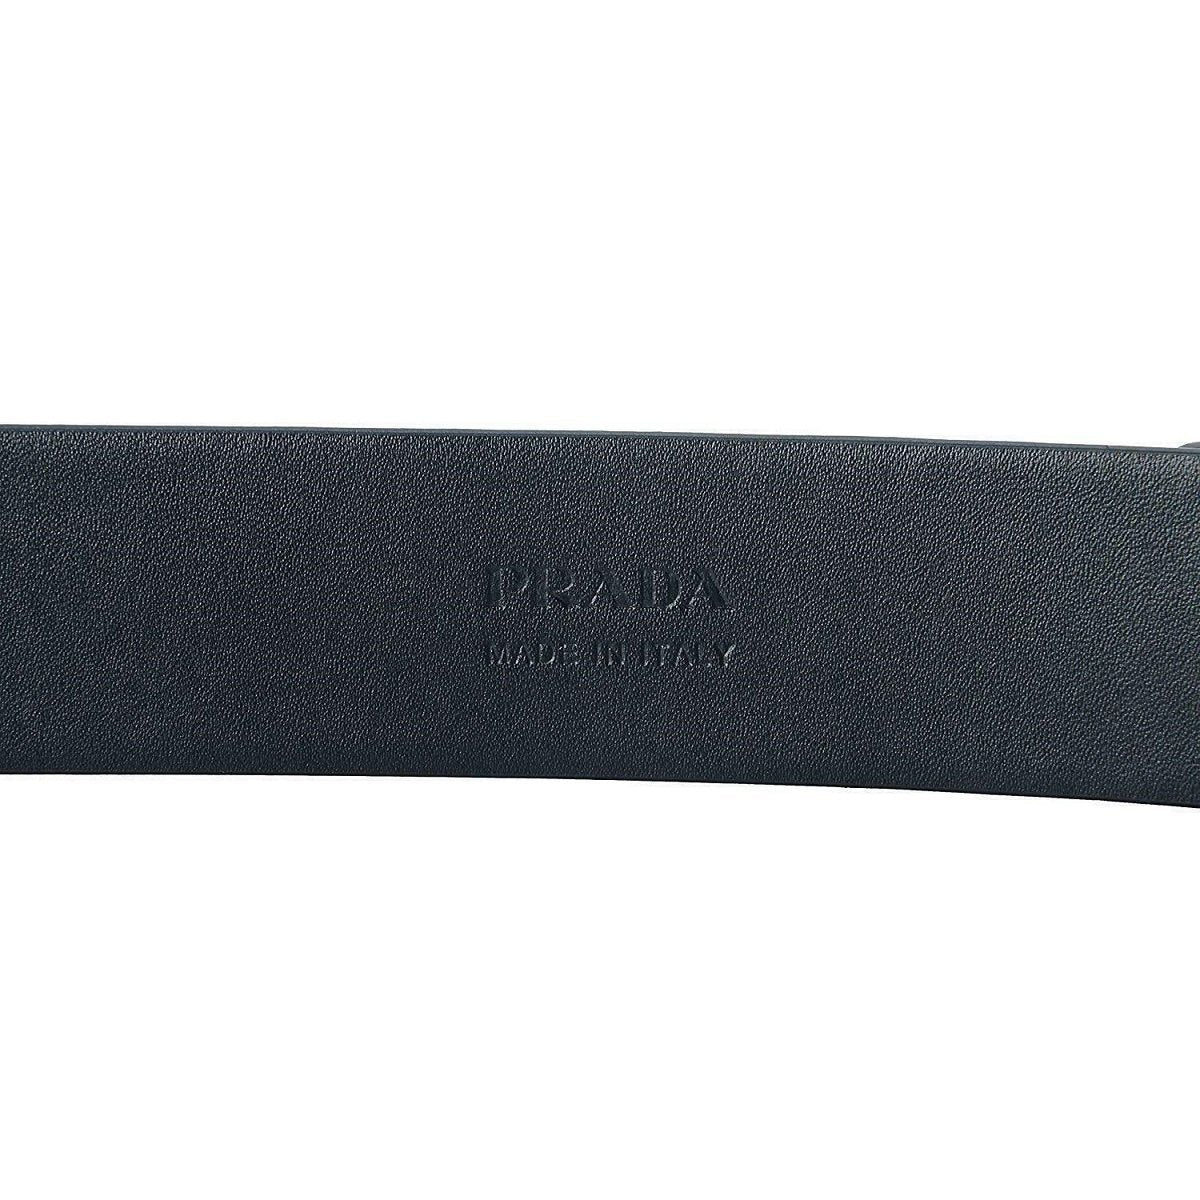 Prada Navy Saffiano Leather Belt  Silver Belt Buckle 2CM046 90-36